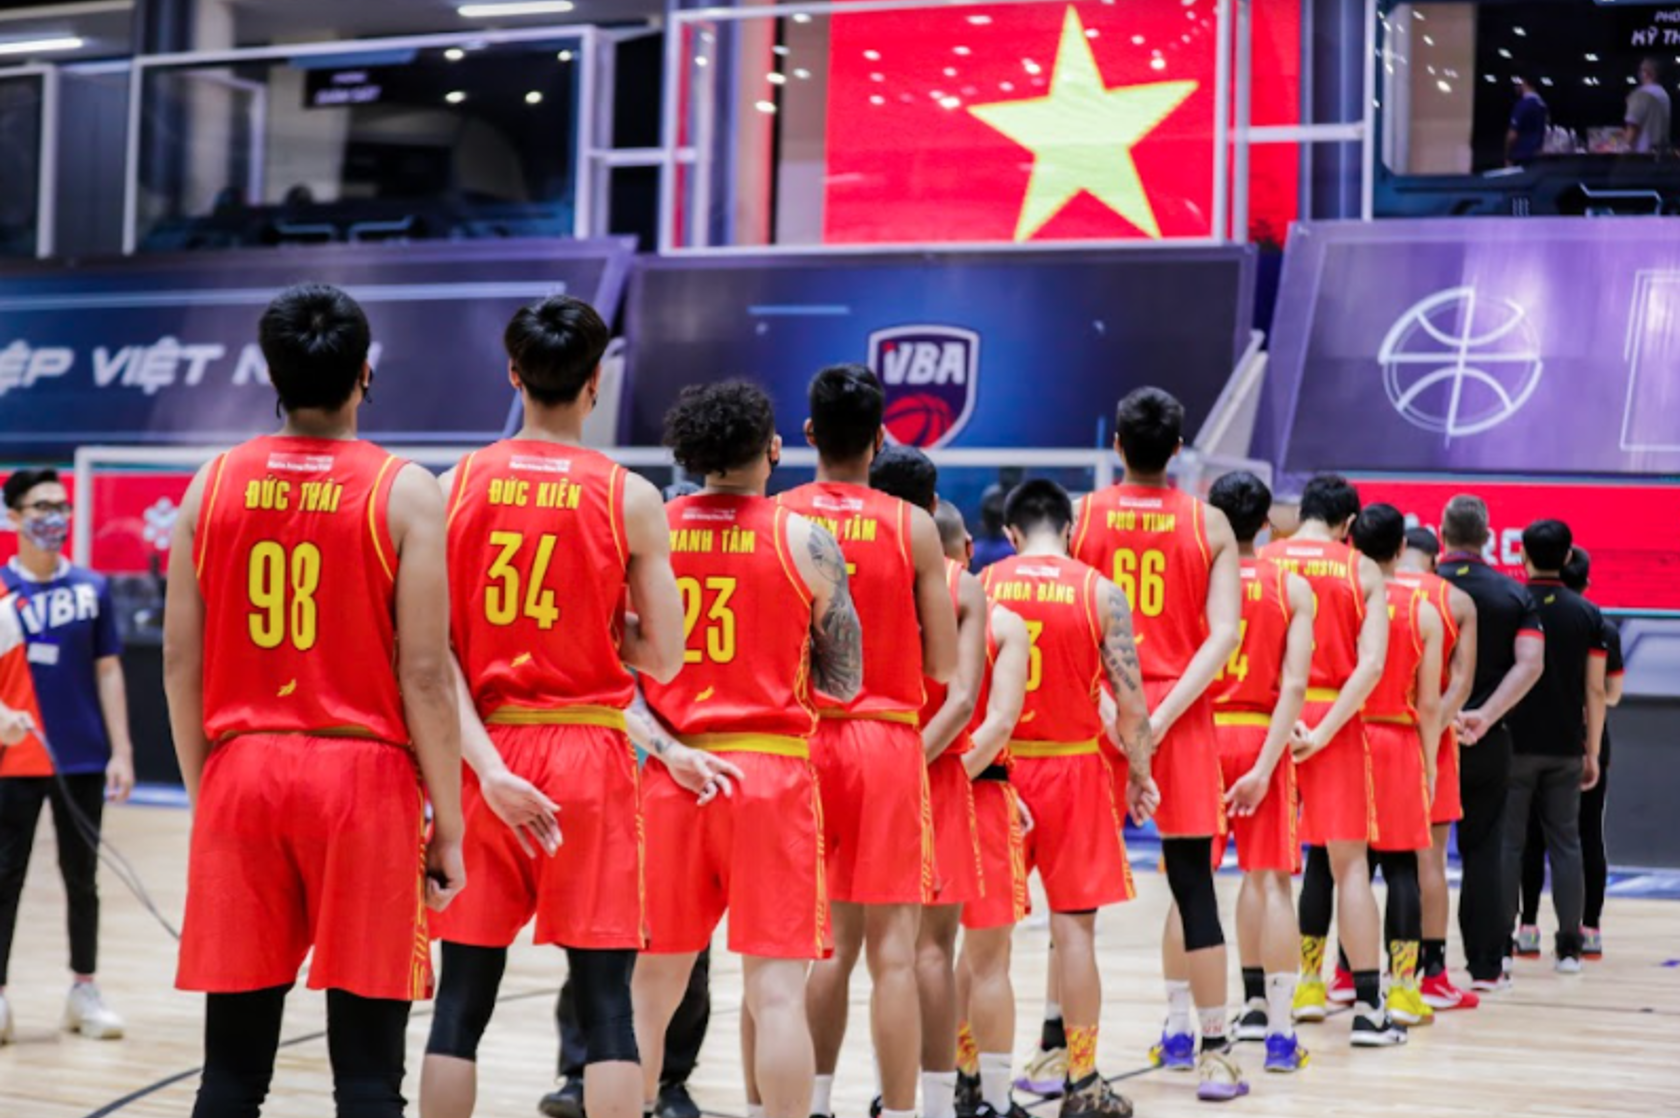 Vietnam’s basketball team has rough debut at VBA